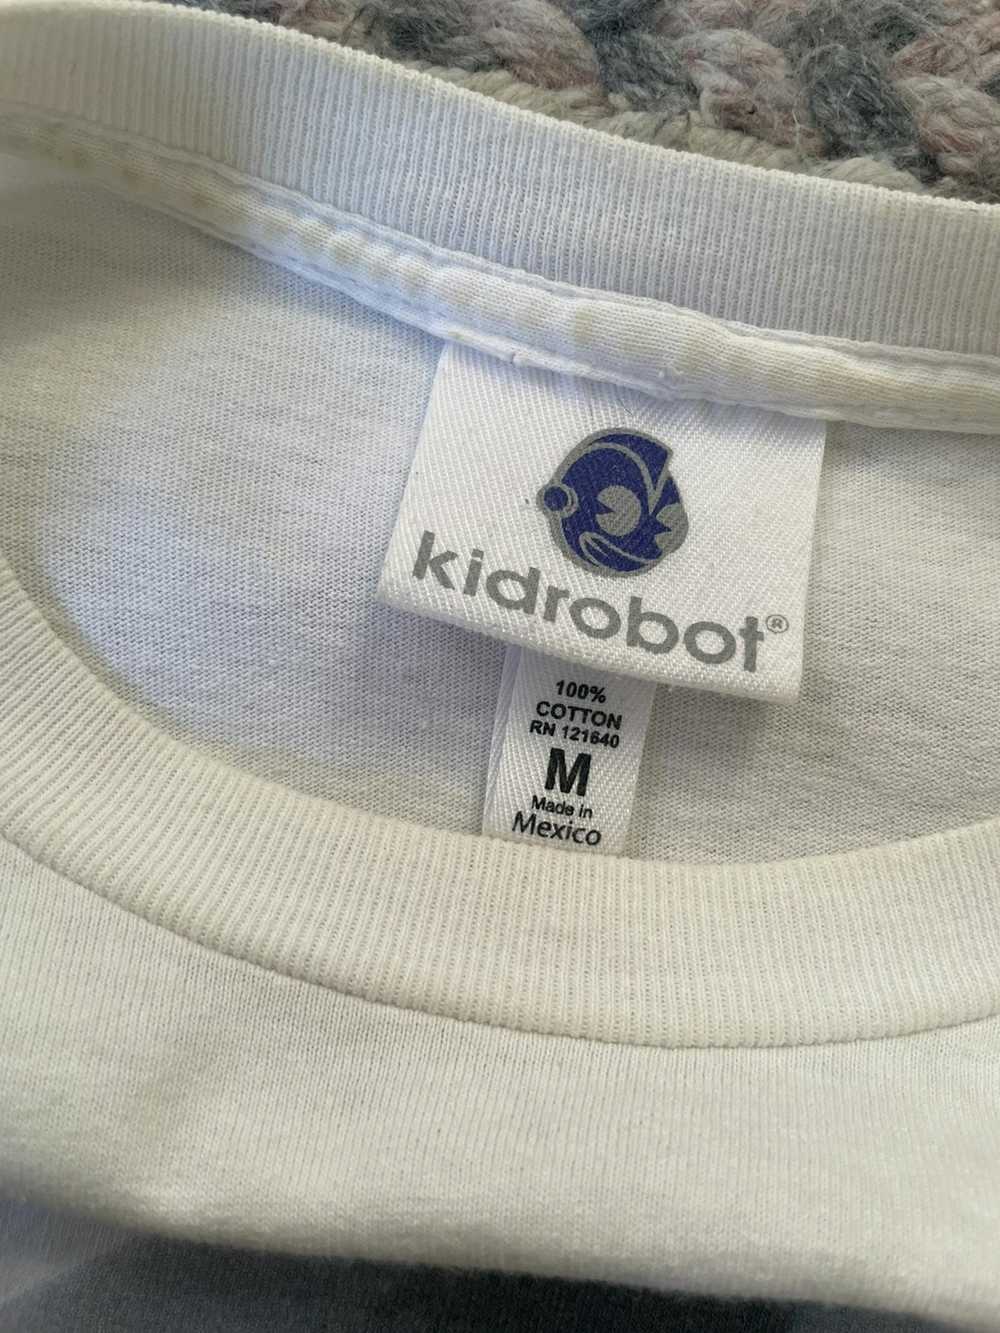 Kid Robot Kid Robot x Huck Gee 3D Toy Shirt - image 5